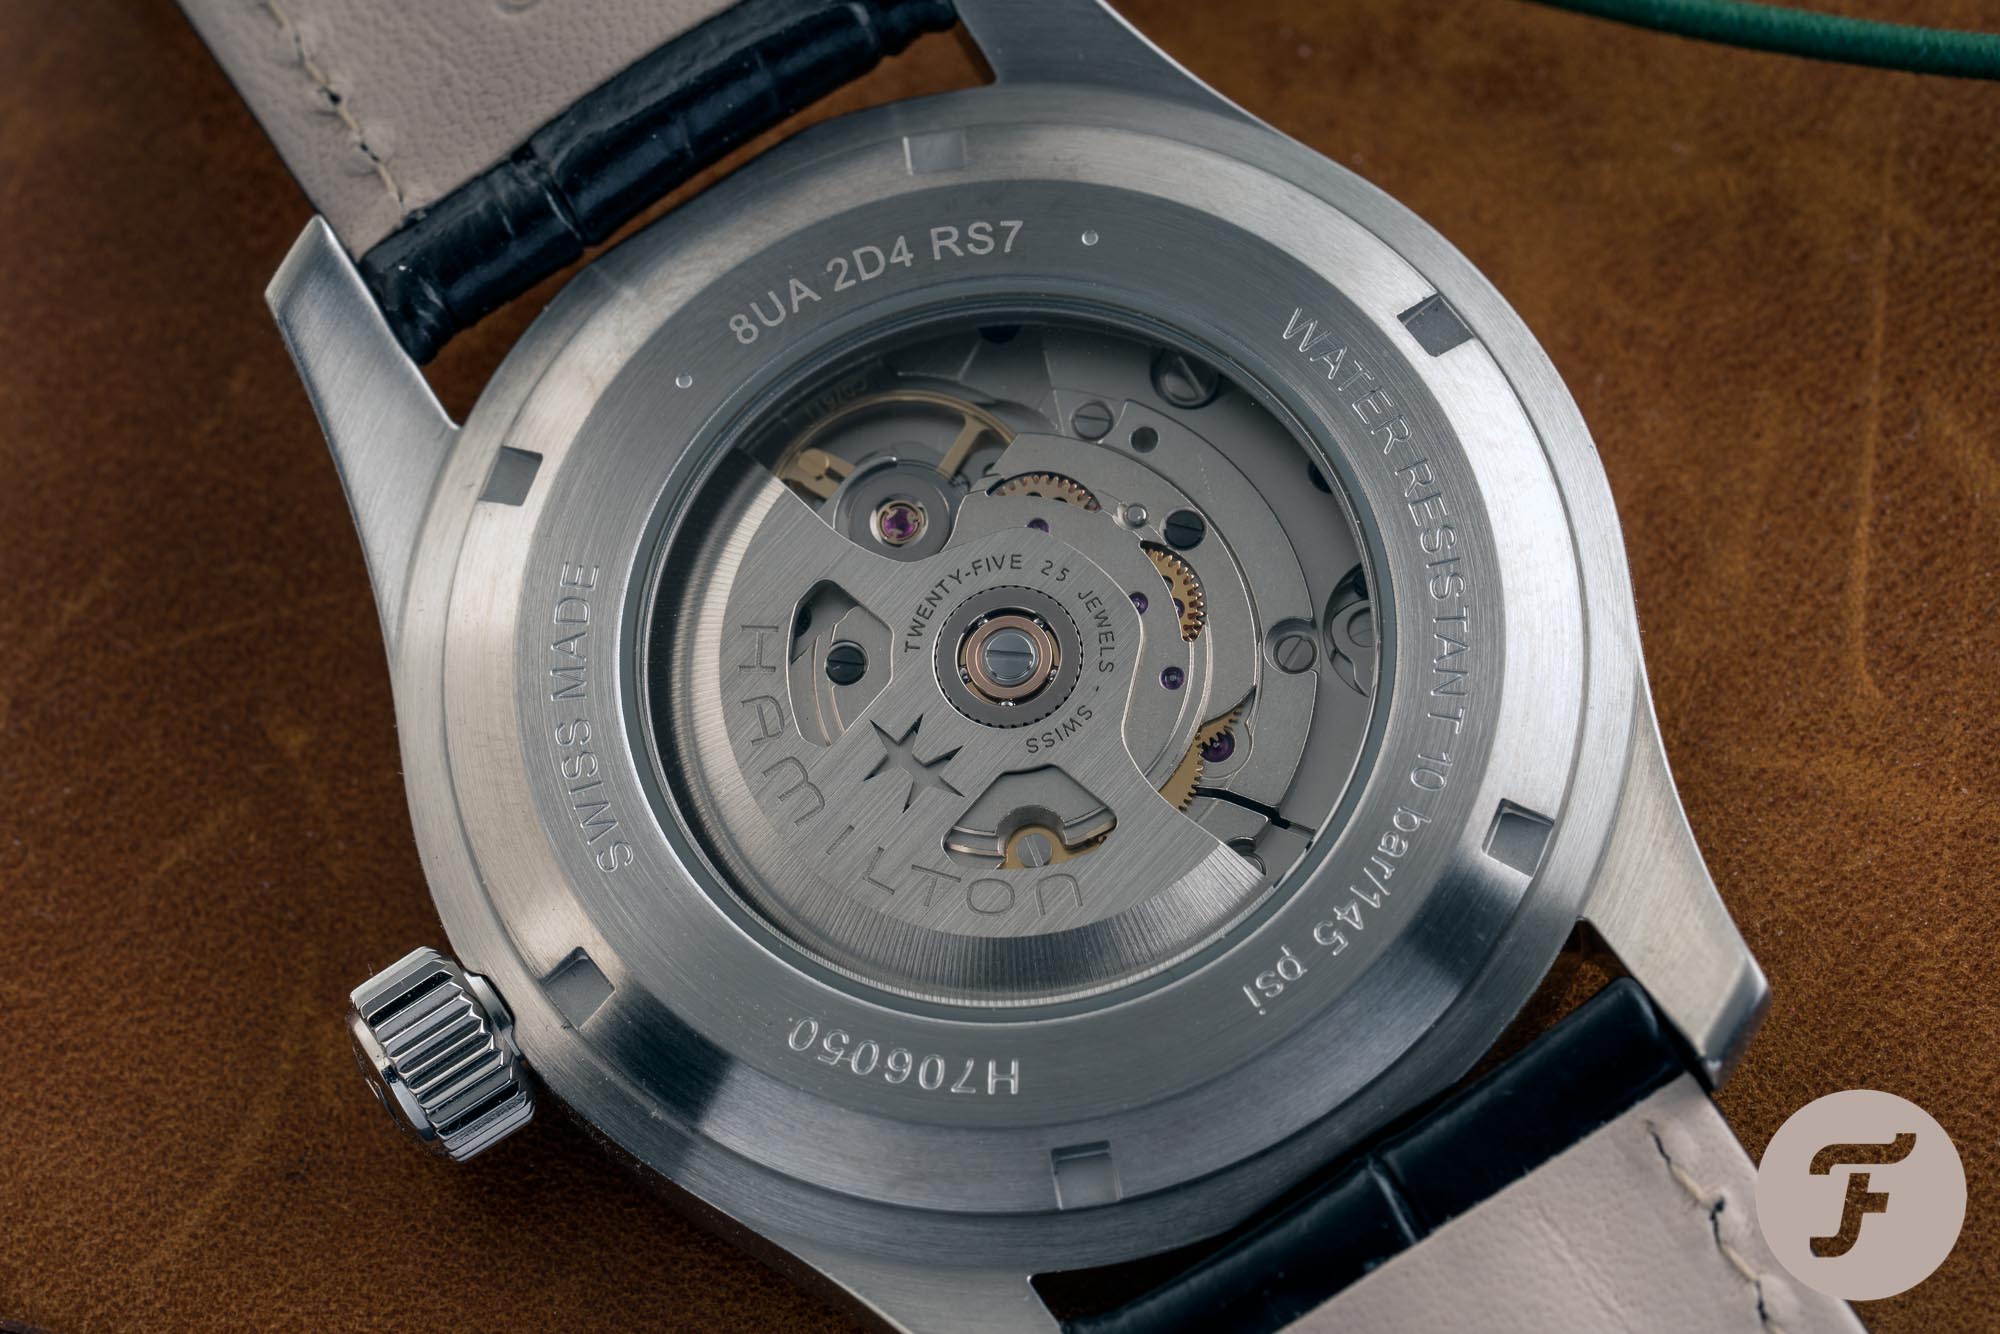 The Hamilton Murph - A Pretty Cool Watch For Under 1000 Euro